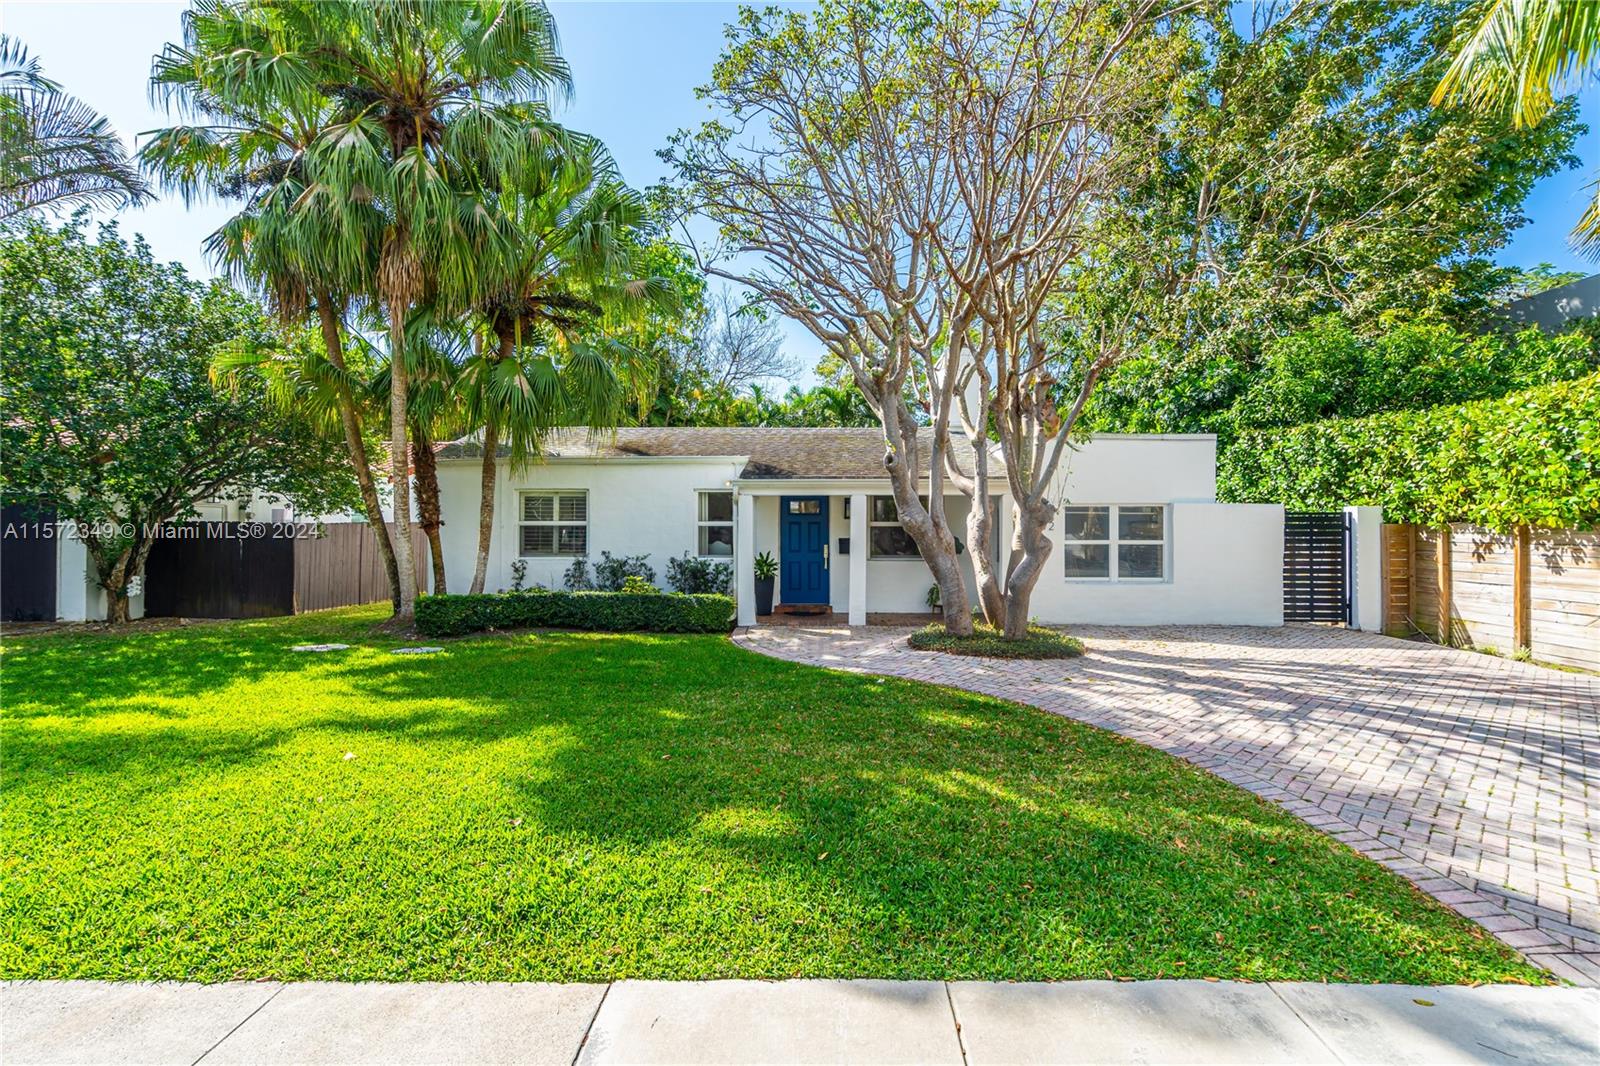 Rental Property at 4072 Park Ave, Miami, Broward County, Florida - Bedrooms: 3 
Bathrooms: 2  - $8,000 MO.